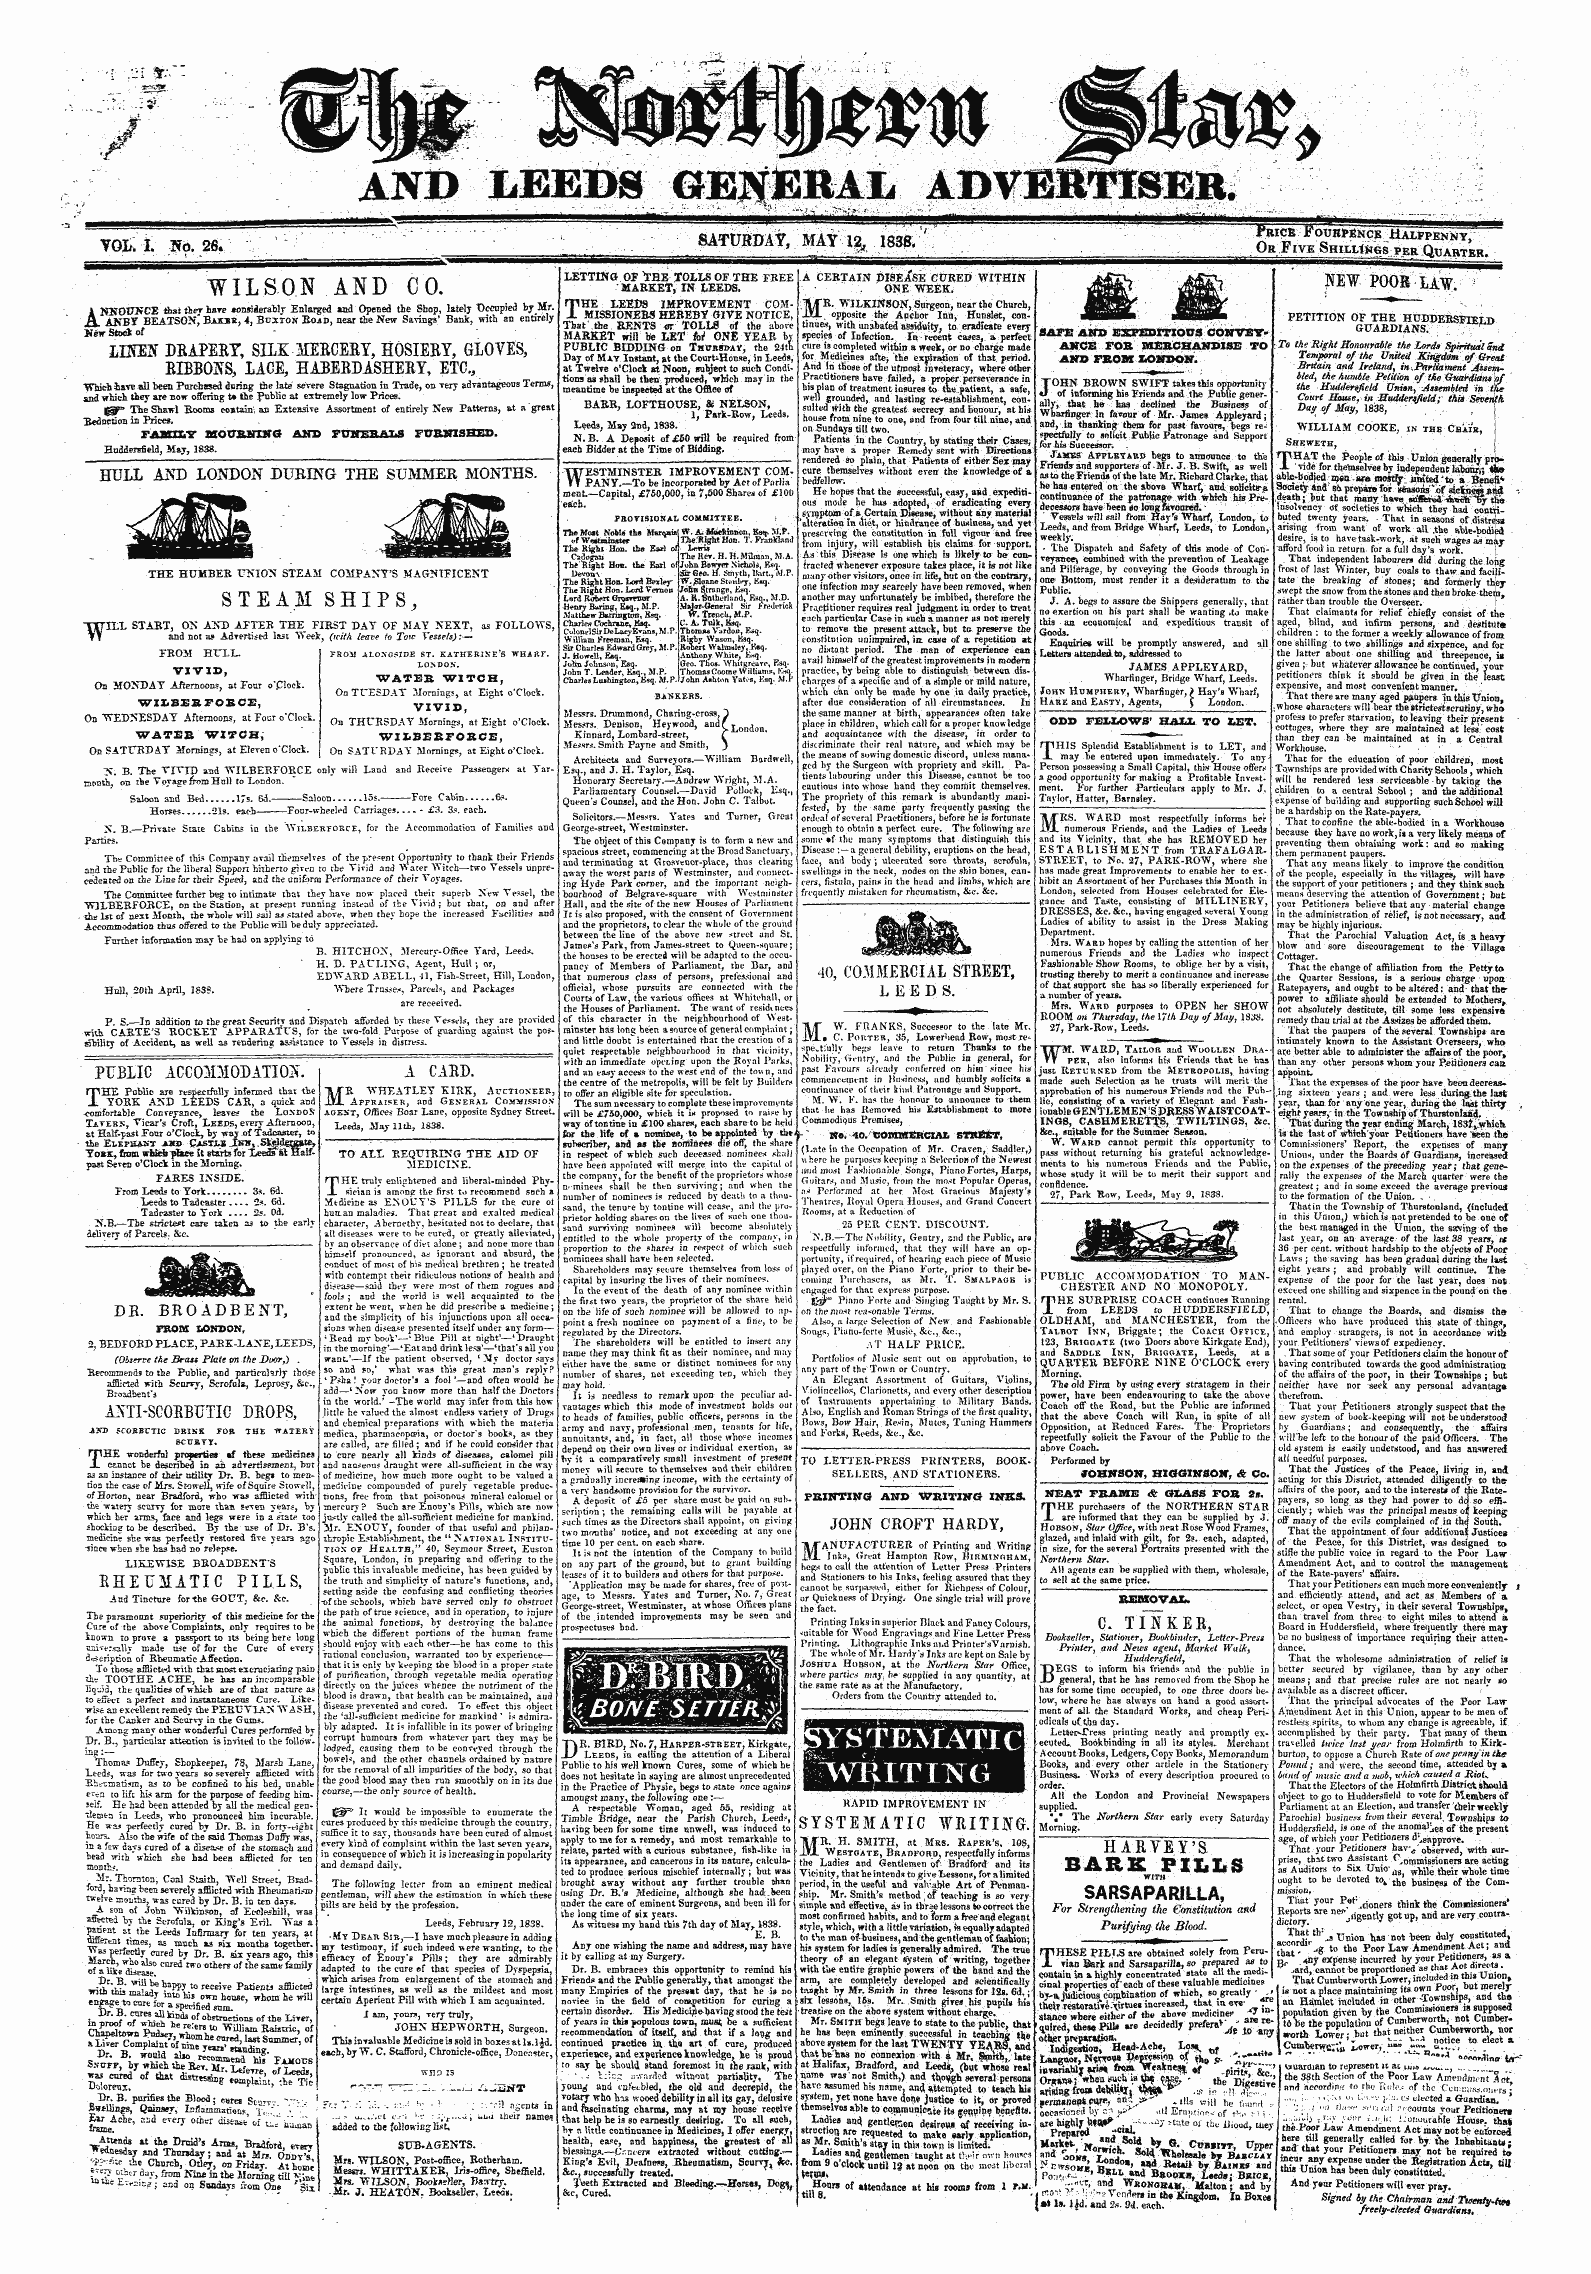 Northern Star (1837-1852): jS F Y, 3rd edition: 1